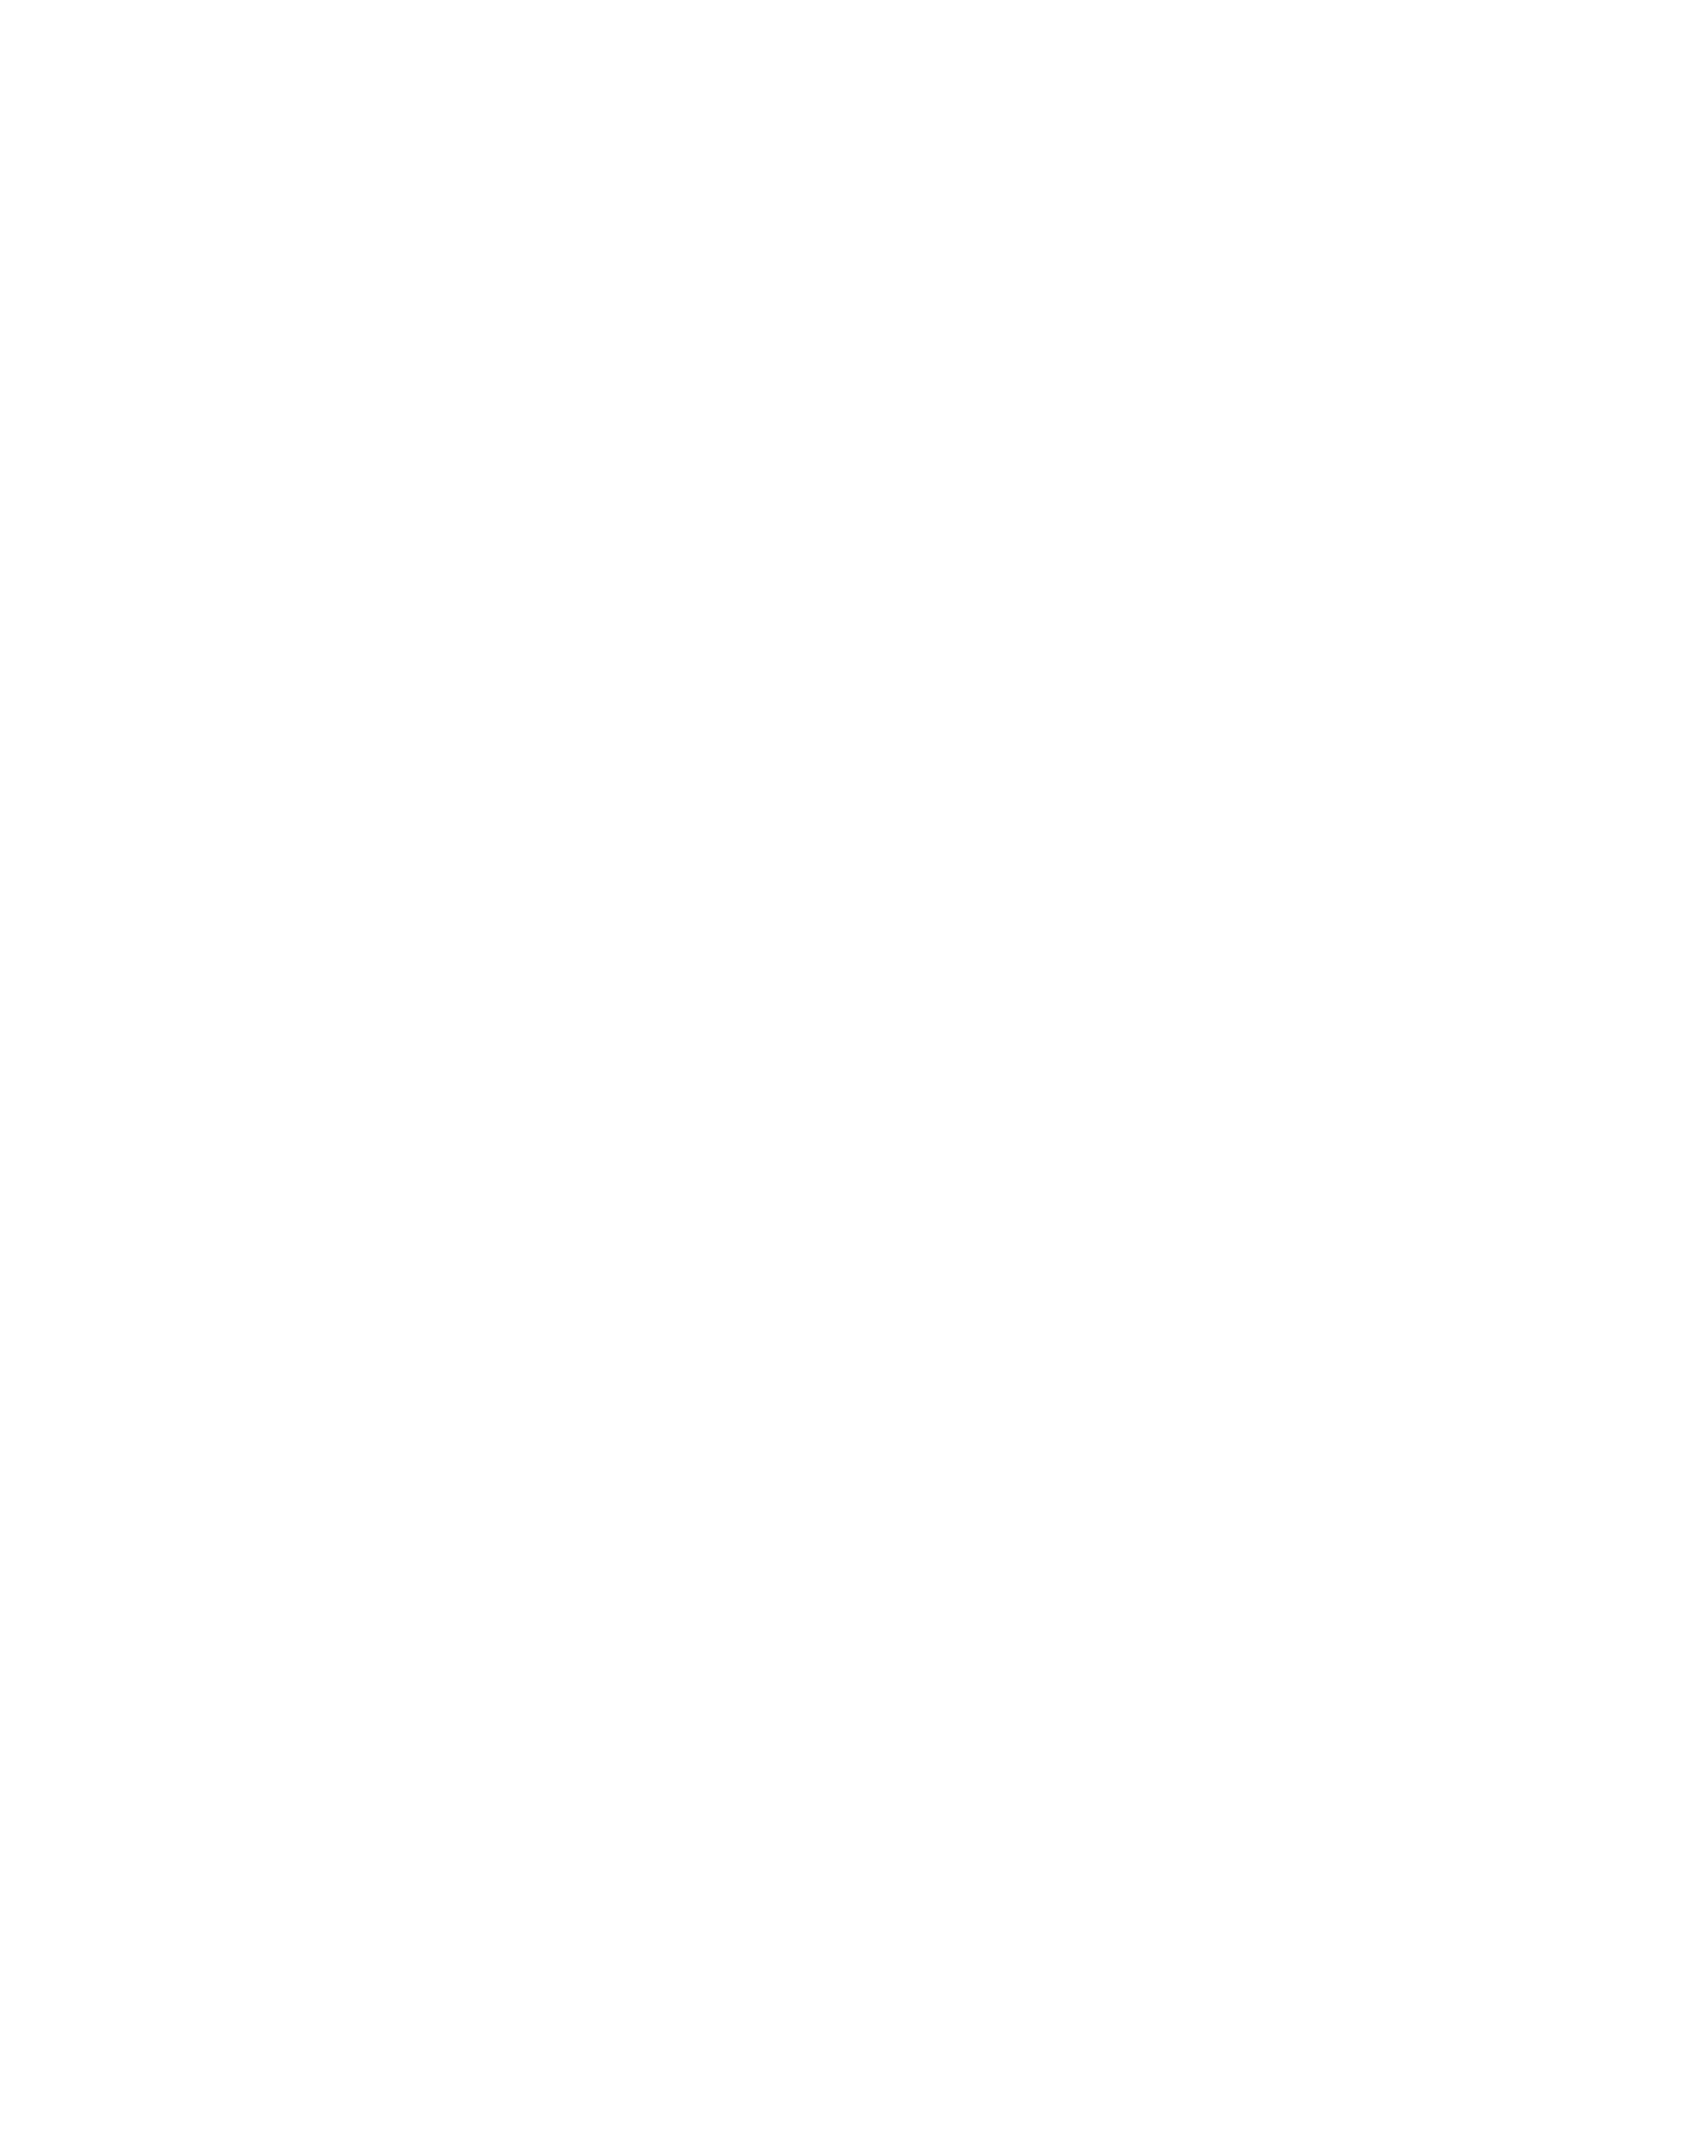 Sir Kwinten